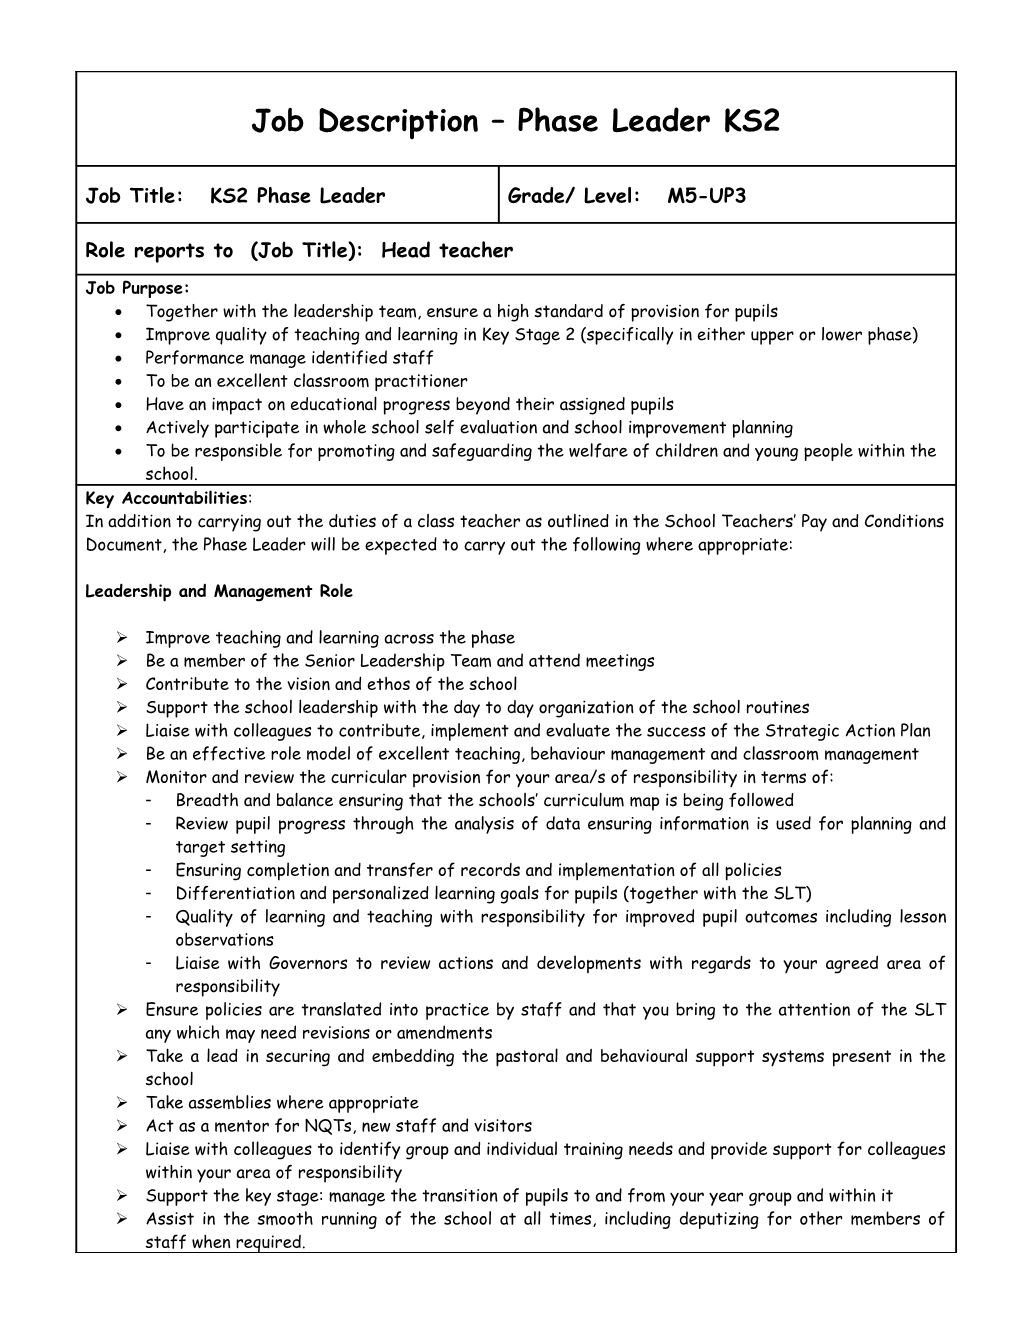 Job Description Phase Leader KS2